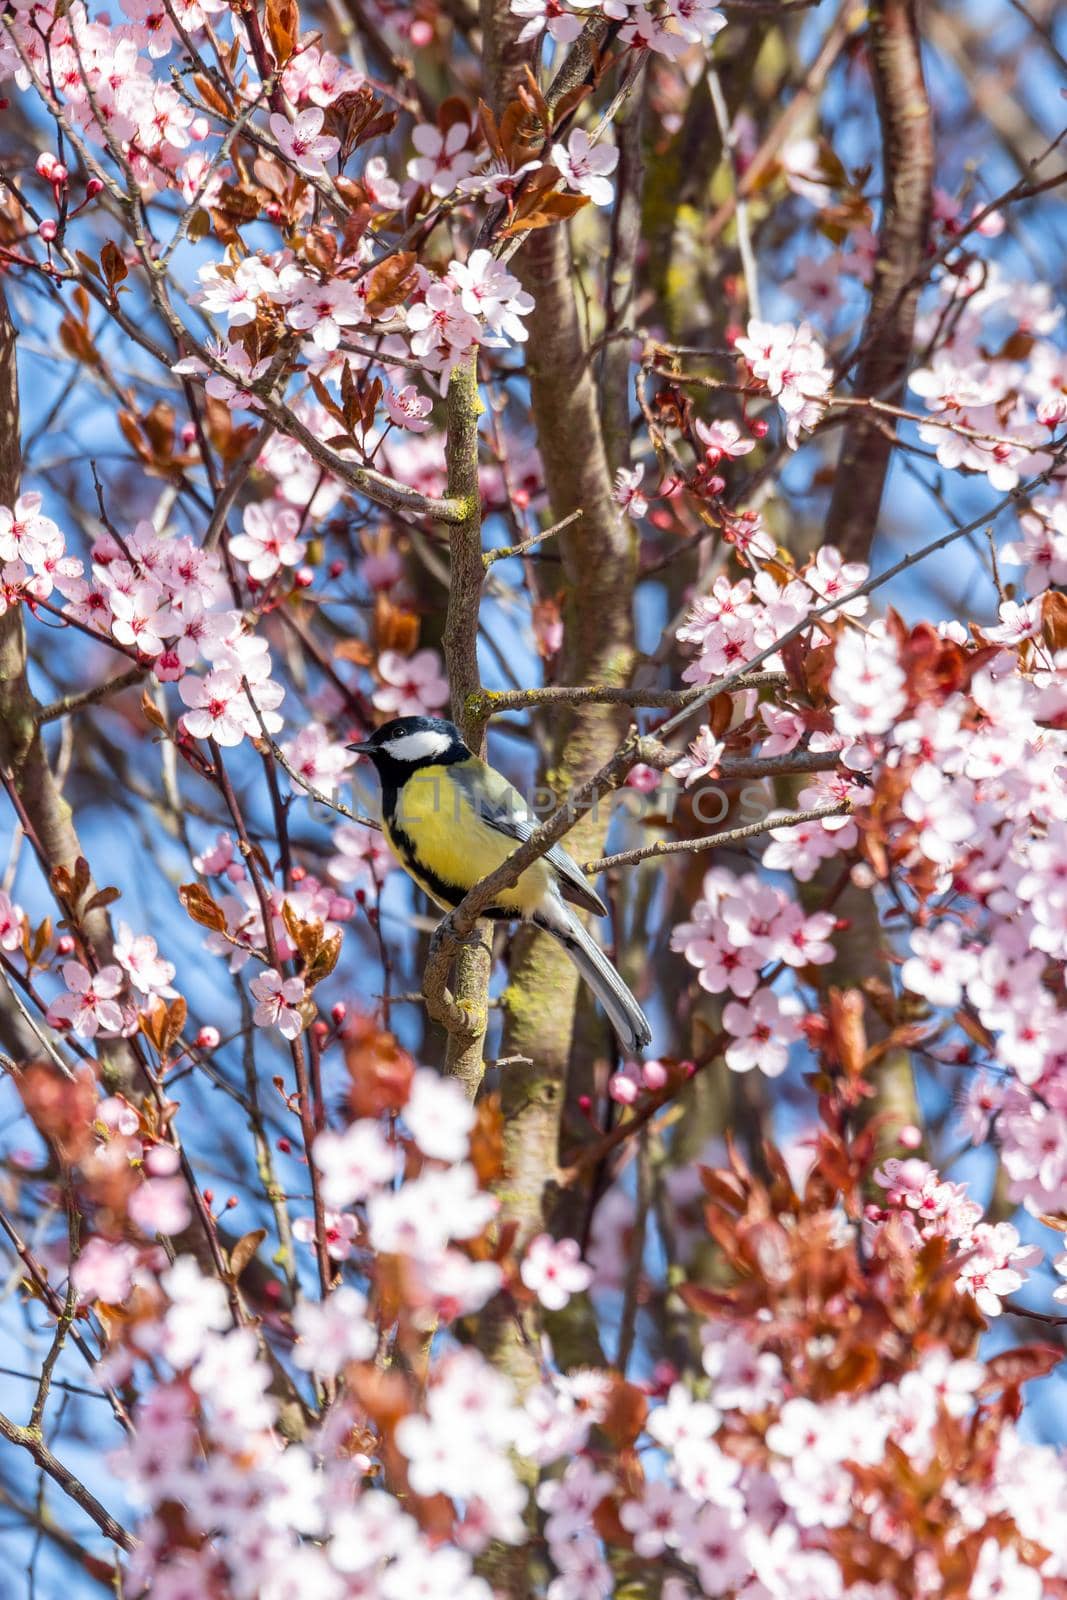 common bird Eurasian blue tit (Cyanistes caeruleus) in the nature perched on flowering Sakura Cherry blossom tree branch. Czech Republic wildlife